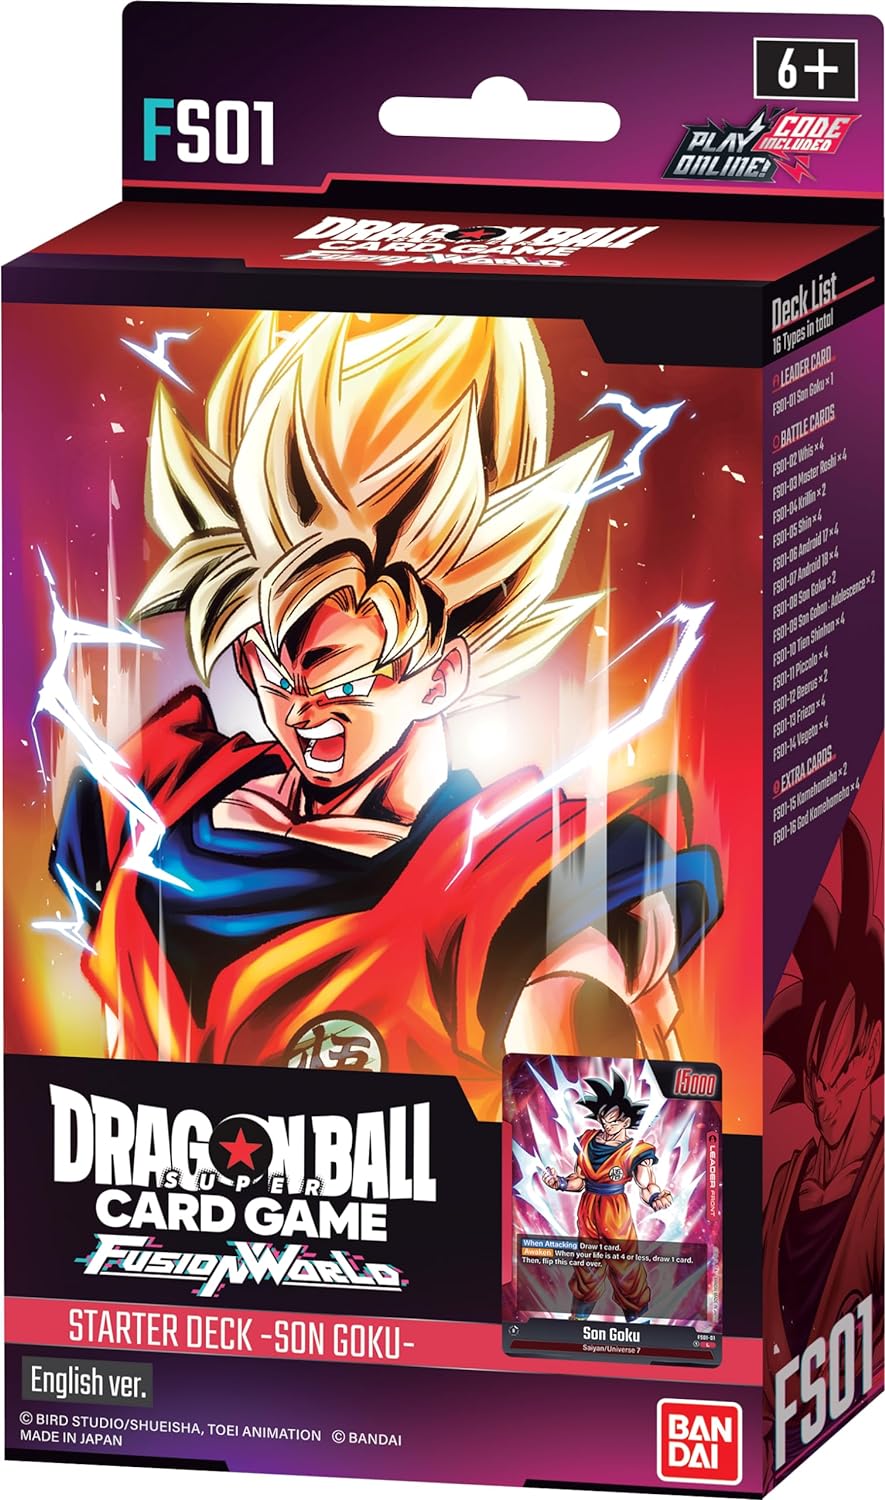 Dragon Ball Super Card Game: Starter Deck - Son Goku - Fusion World (FS01) - Englisch